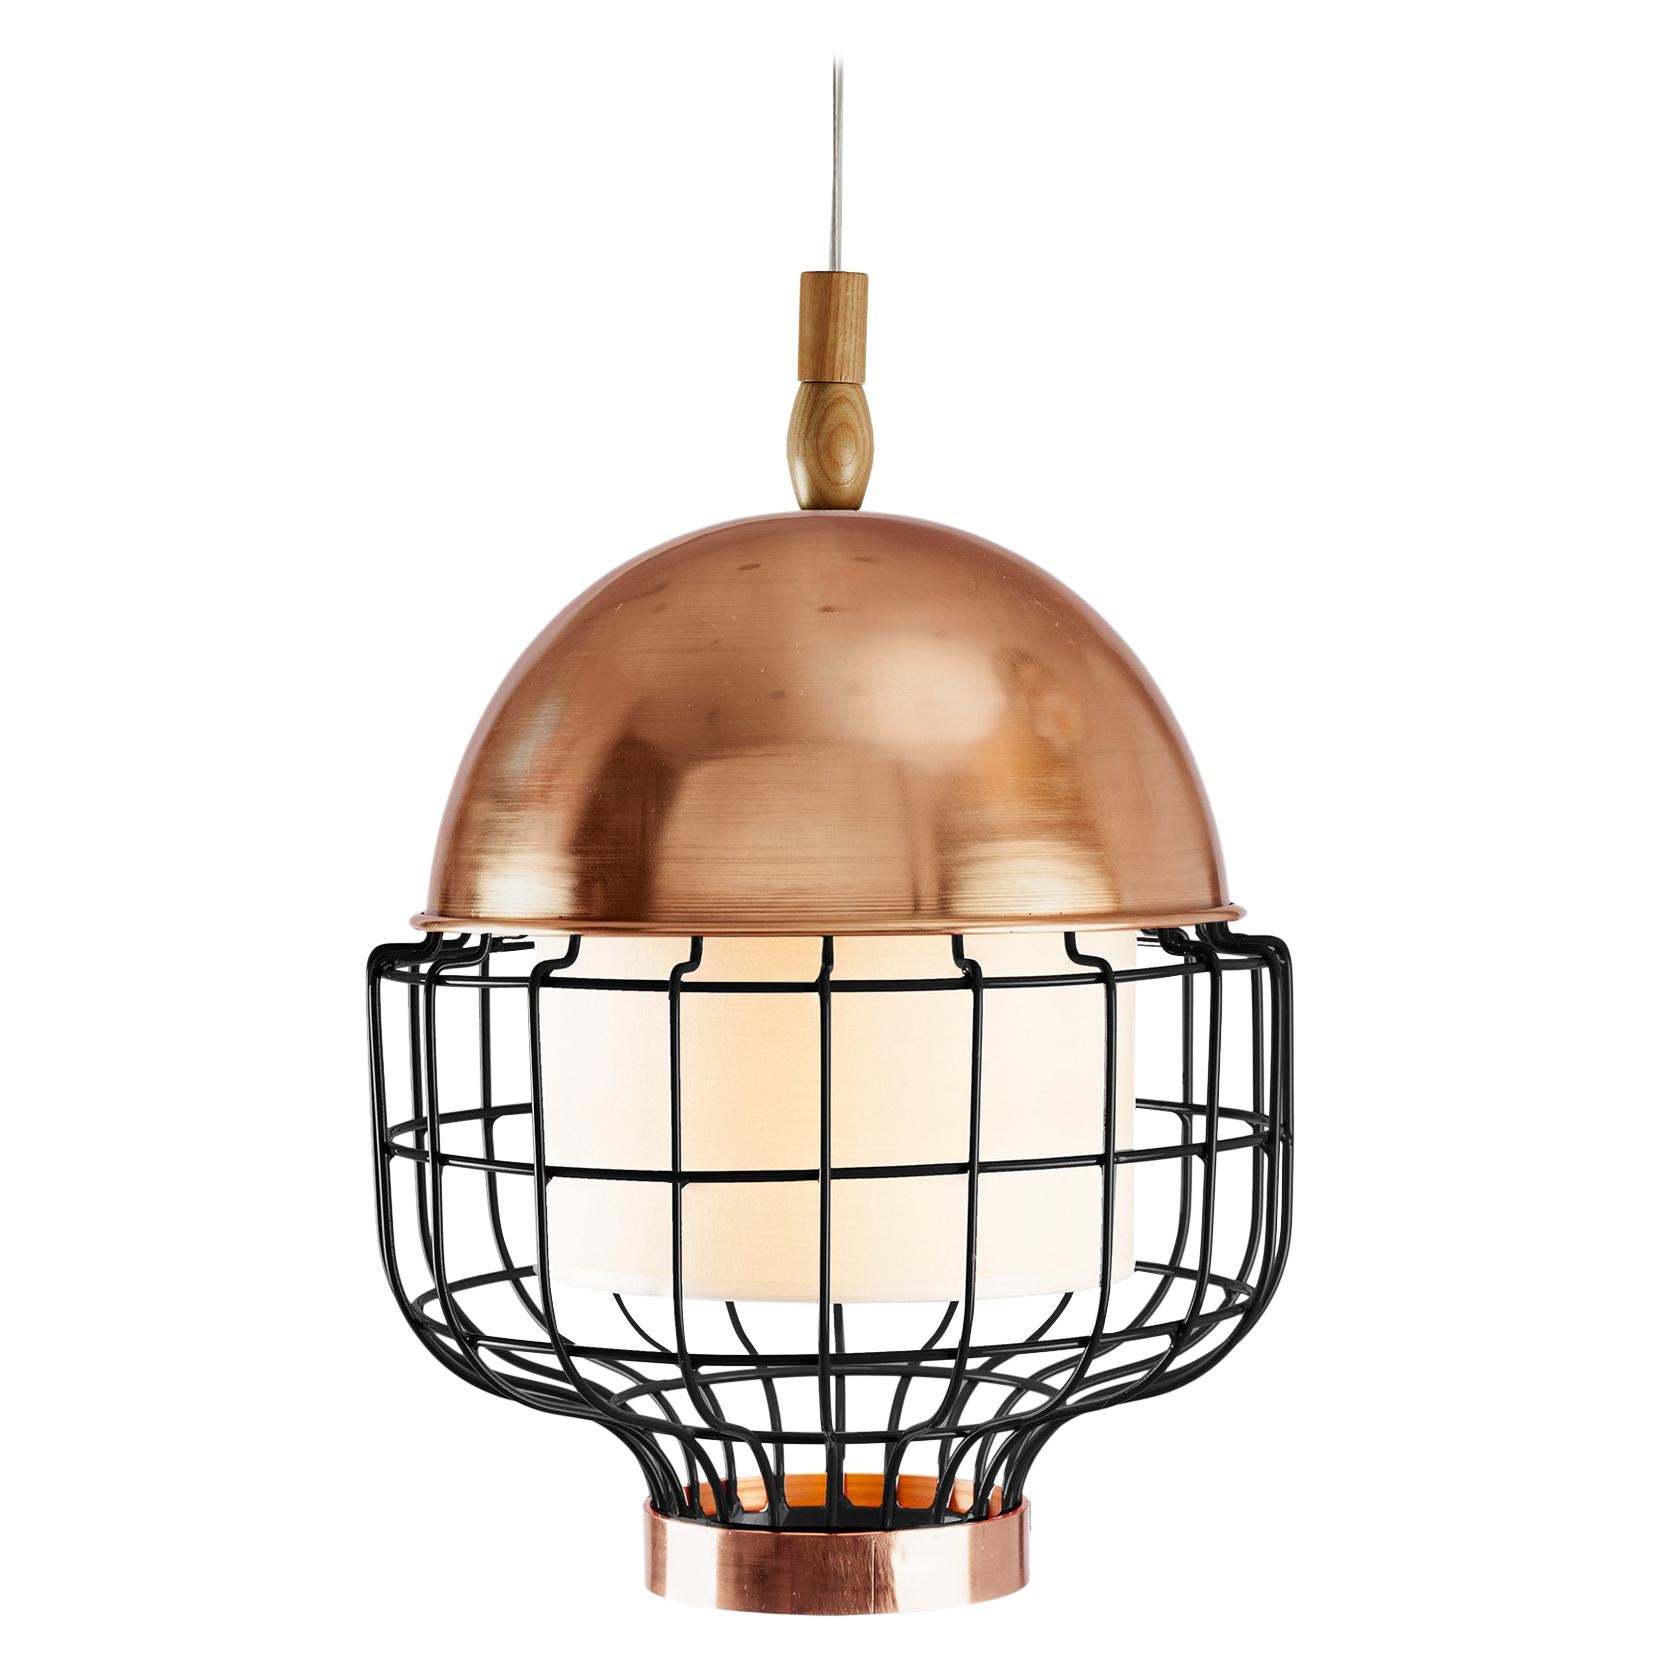 21st Century Art Deco Magnolia III Pendant Lamp Polished Copper and Black